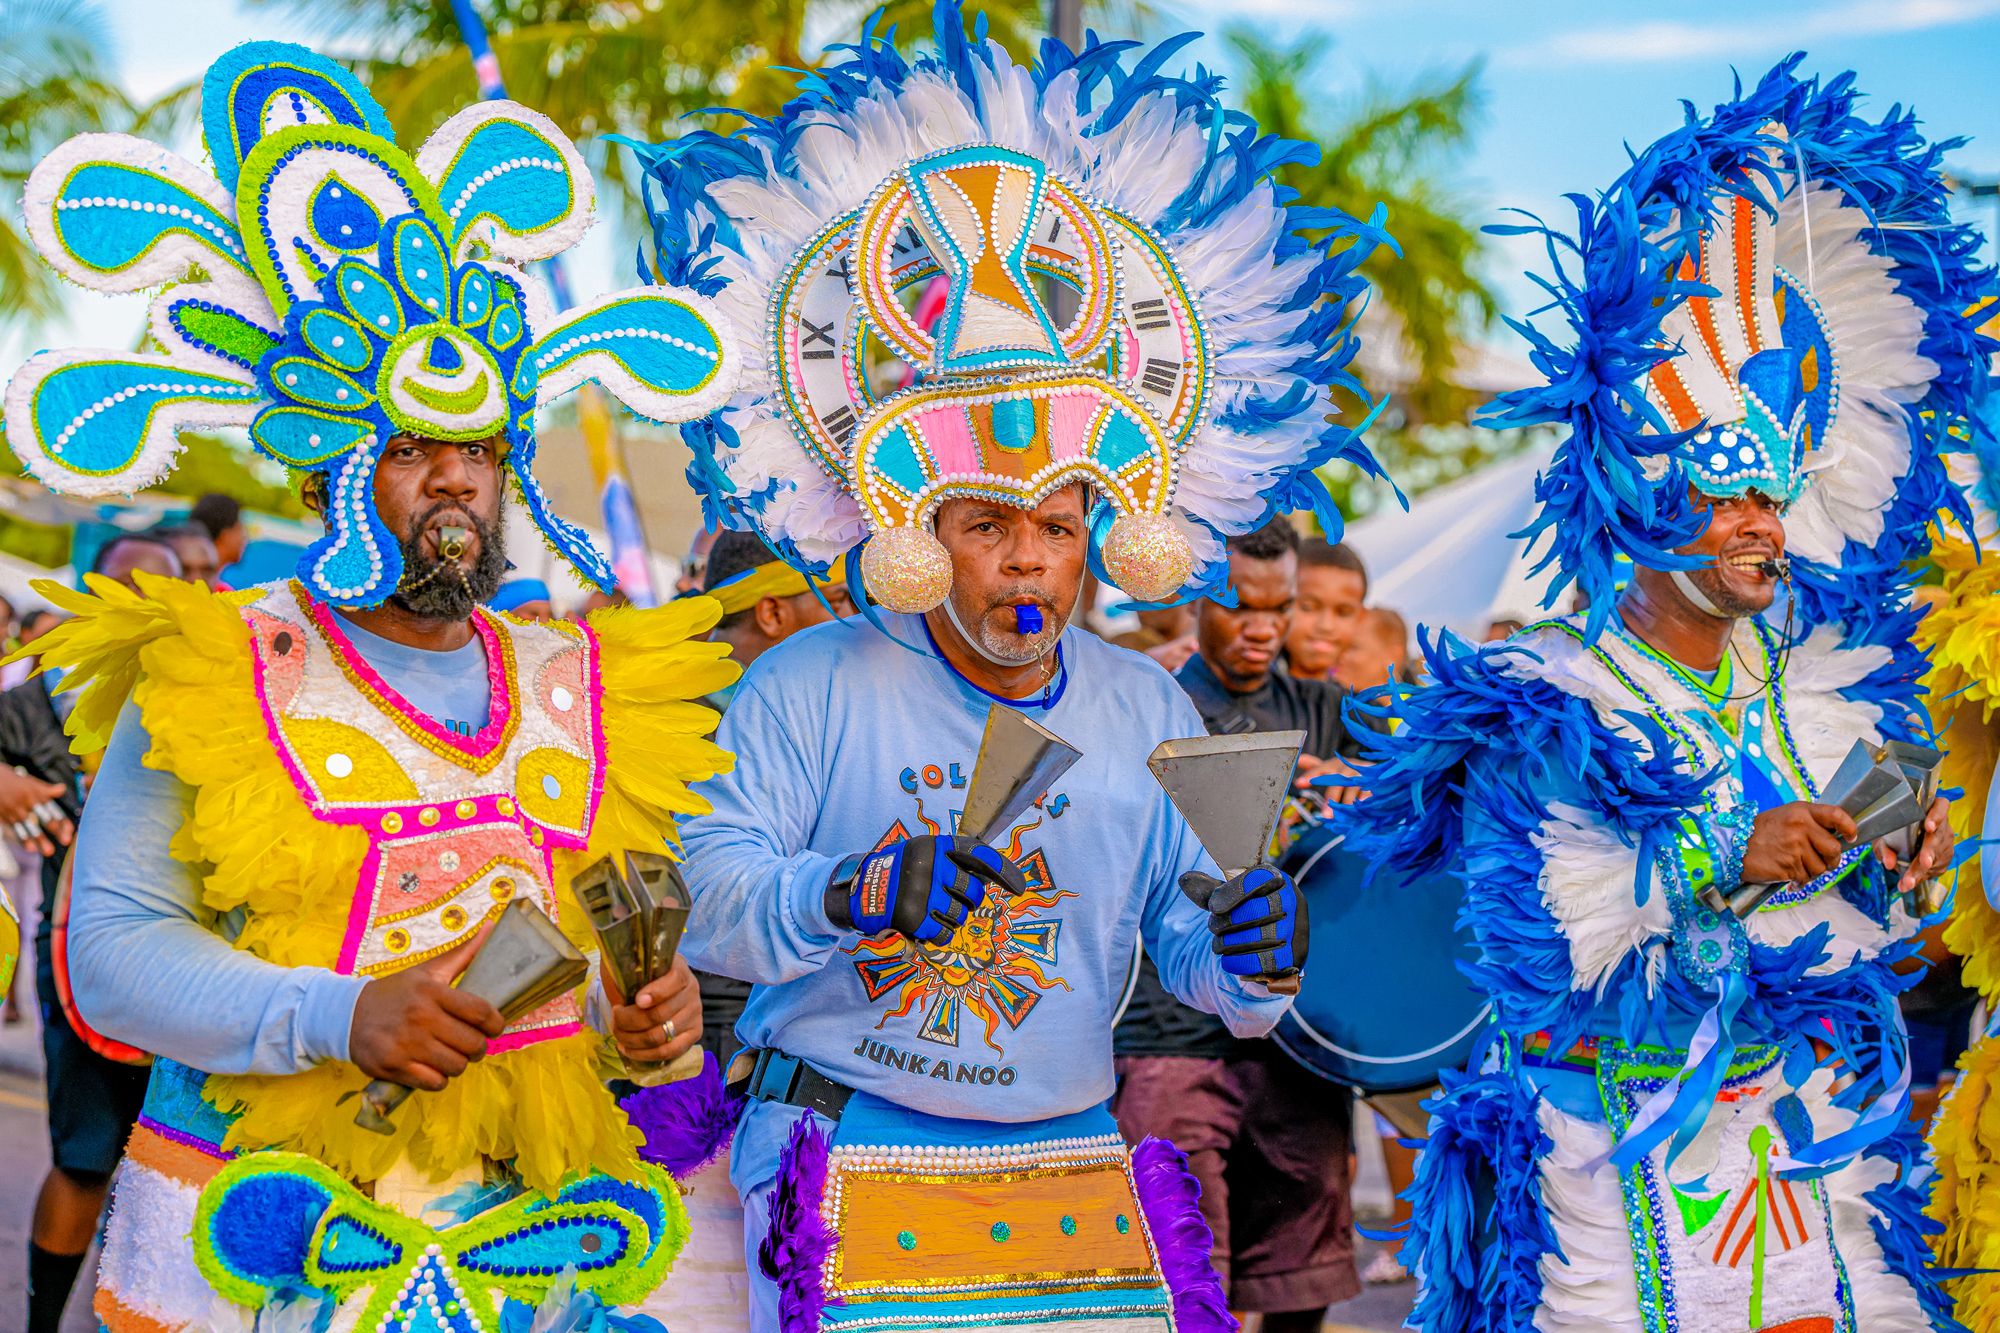 Nassau-Bahamas-2019-Goombay-festival-junkanoo-costume